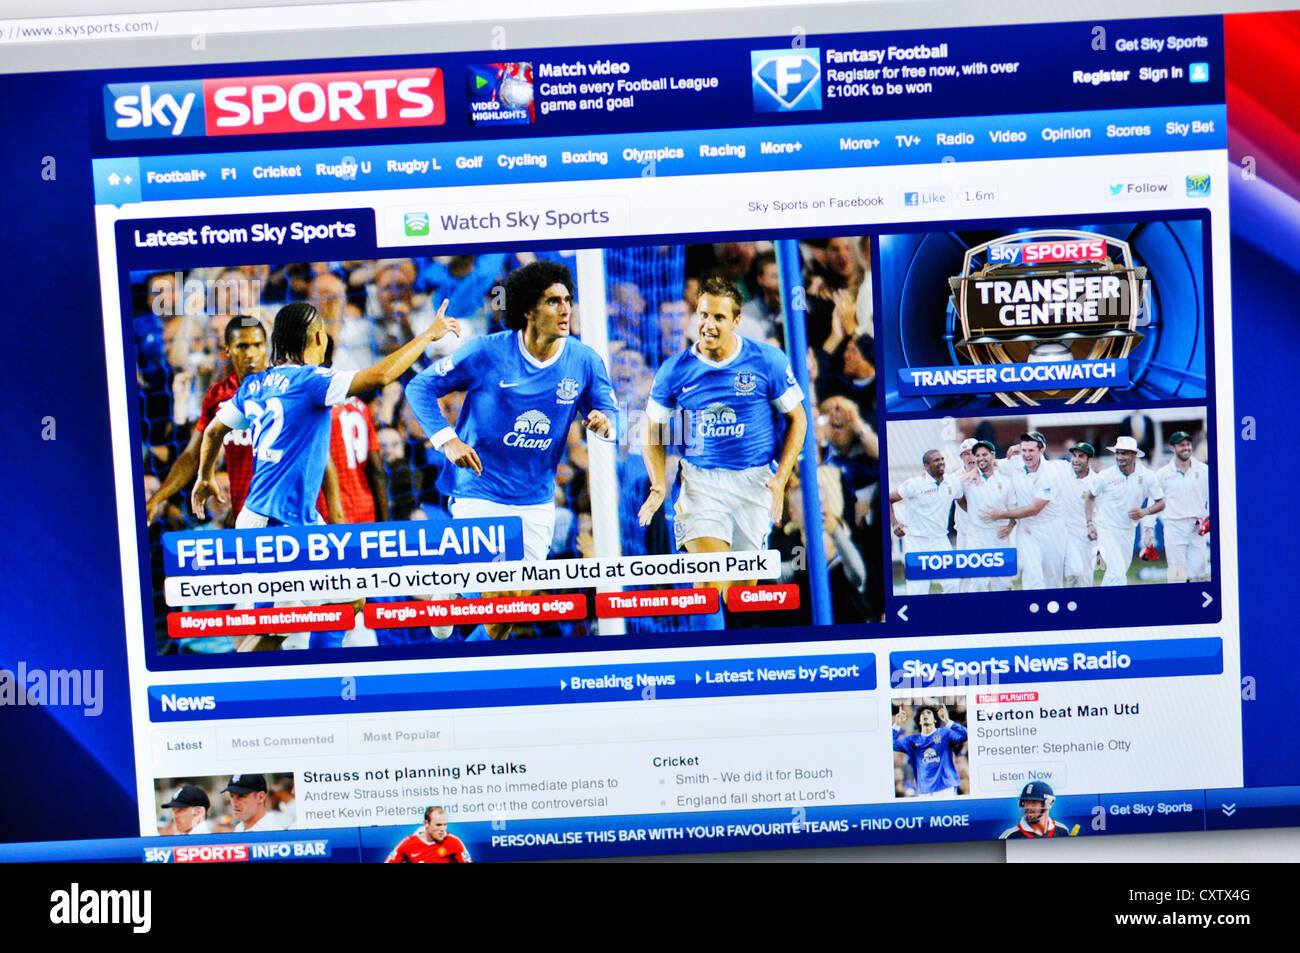 Skysports sito web online - Notizie sportive Foto Stock